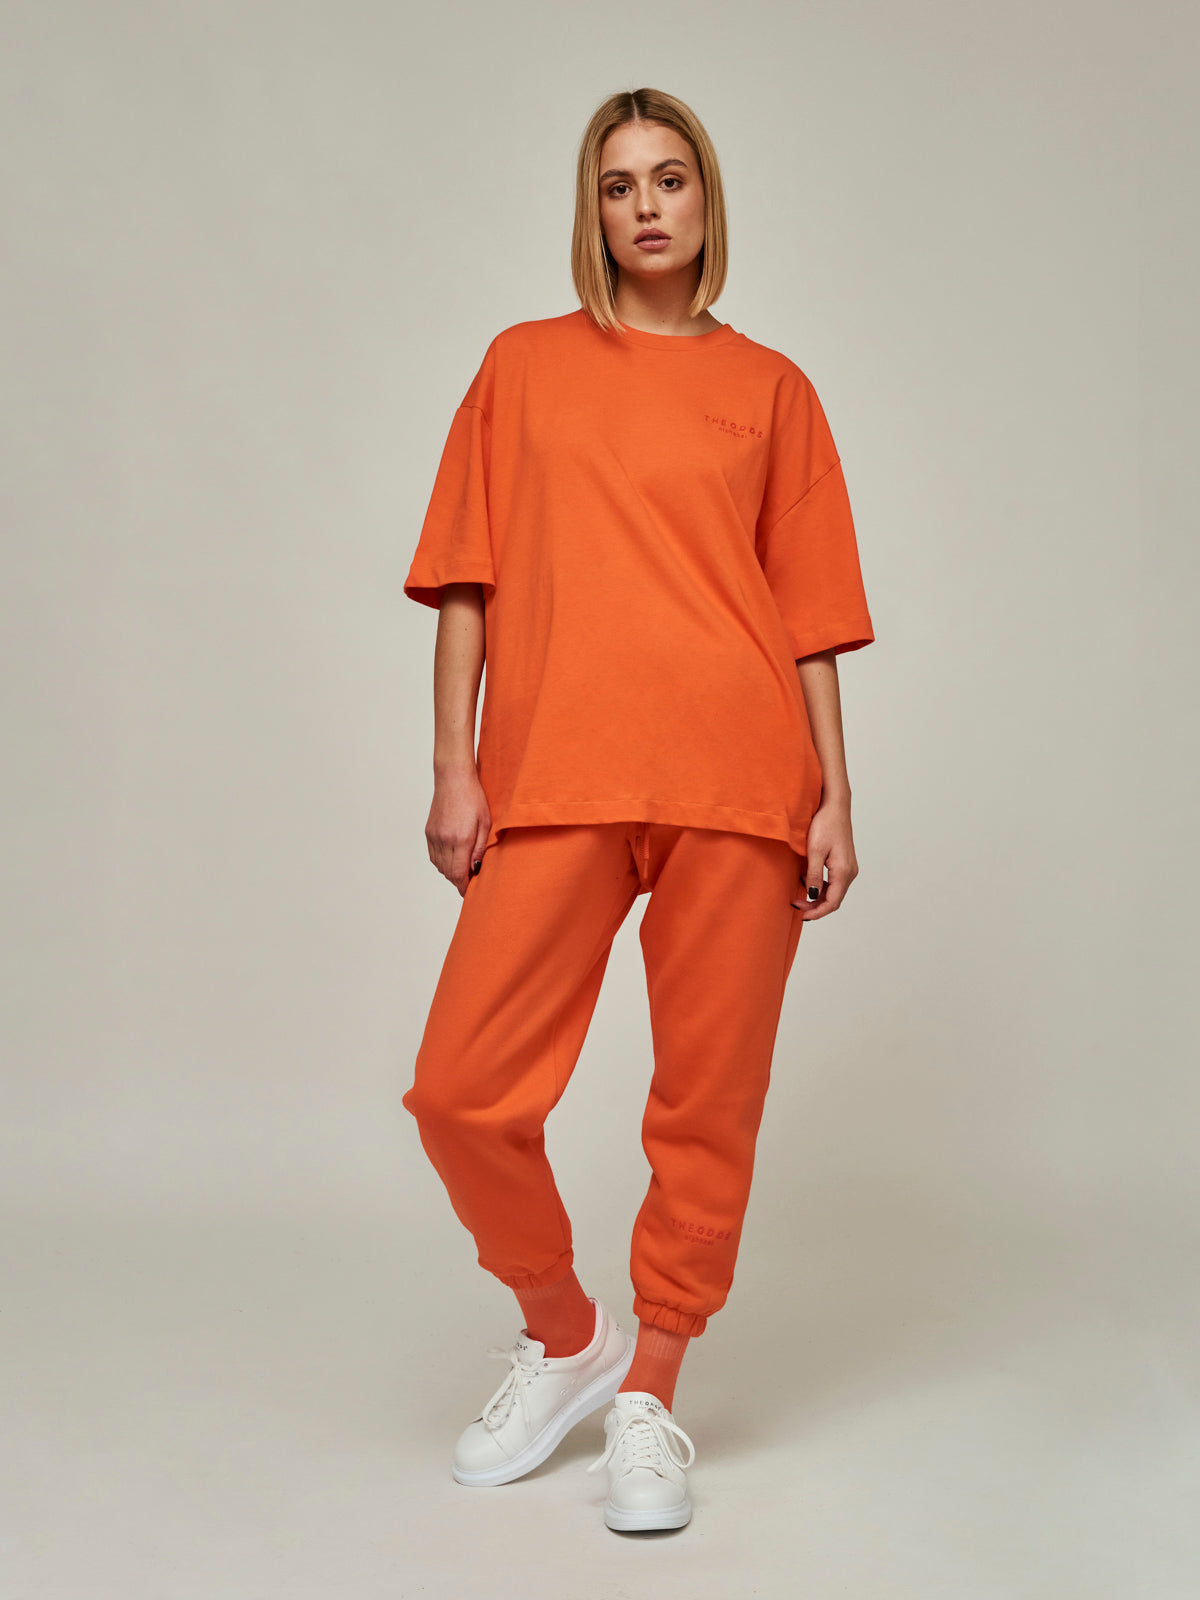 Loose T-Shirt Odd Orange/ alphabet